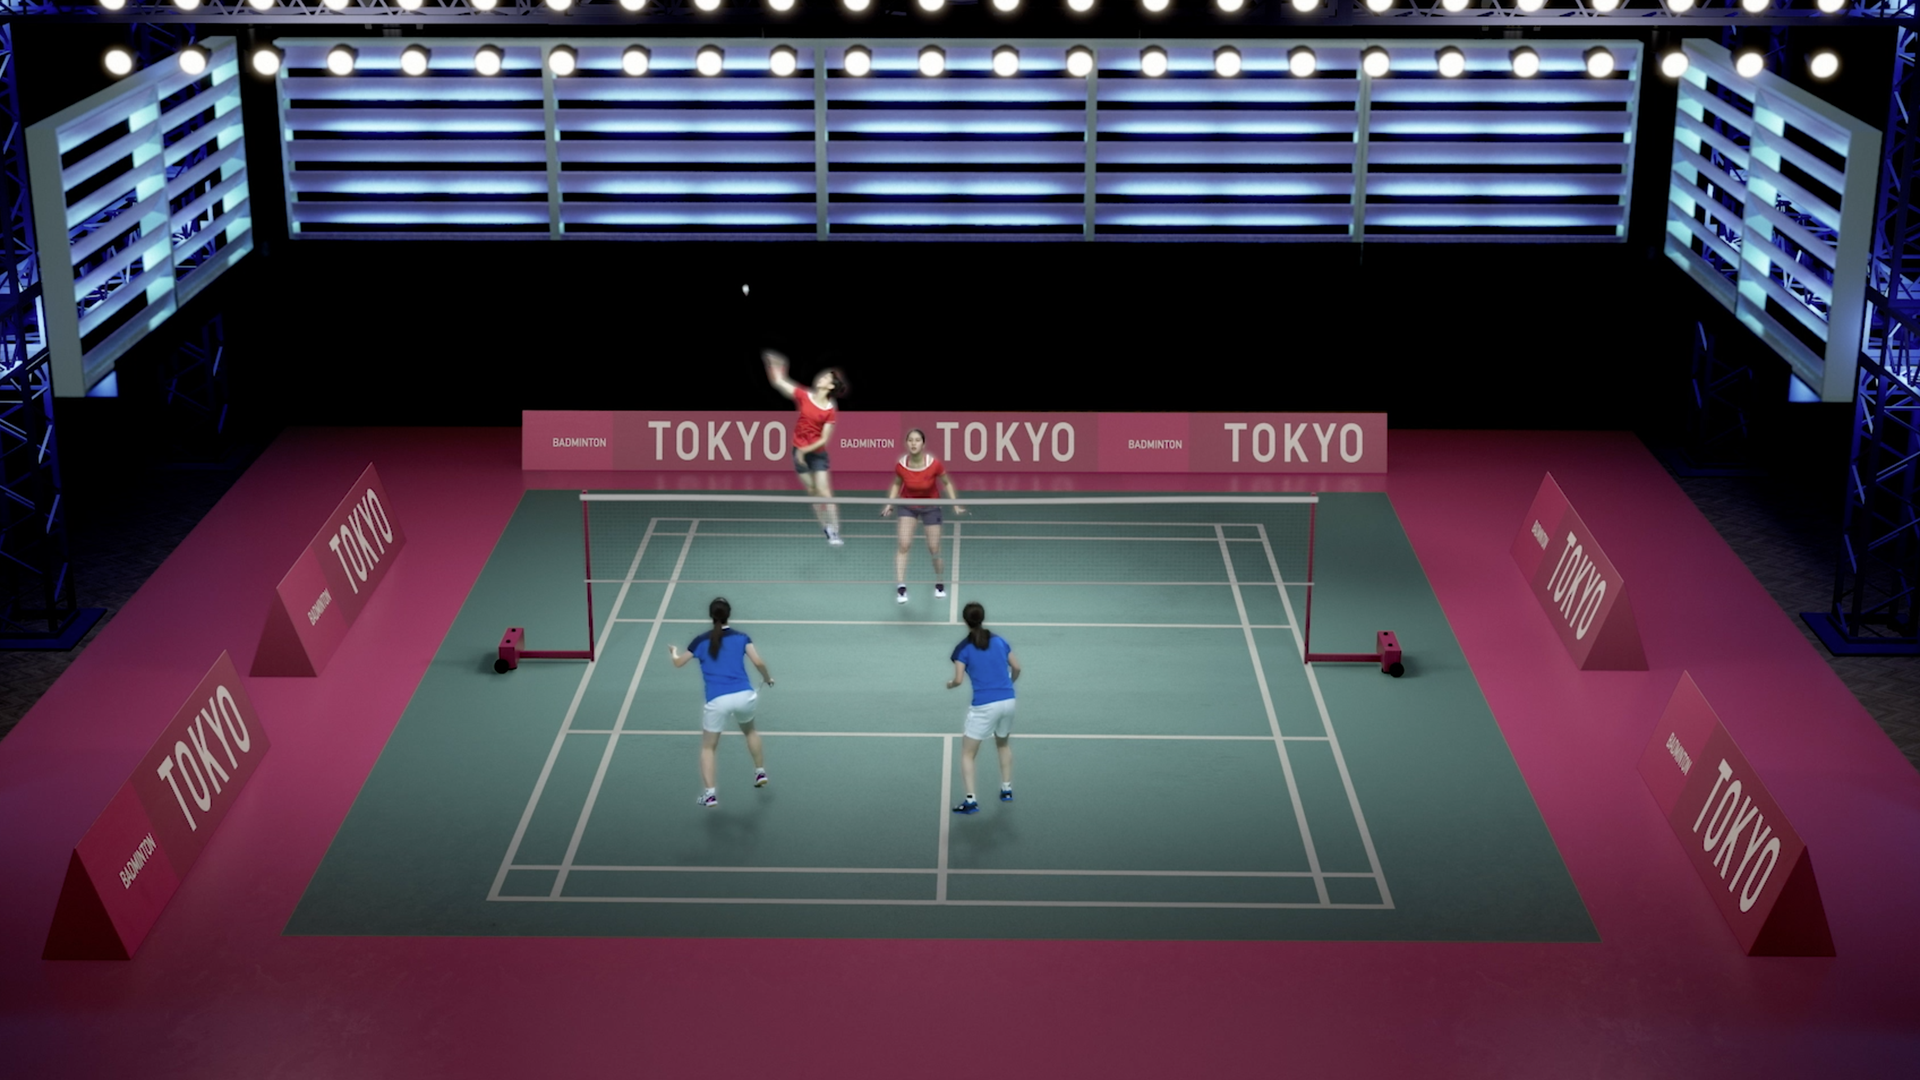 Гейм бадминтон. Площадка для игры в бадминтон. Бадминтон игра на двоих Токио. Бадминтон среди женщин. Badminton ayollar jamoasi.